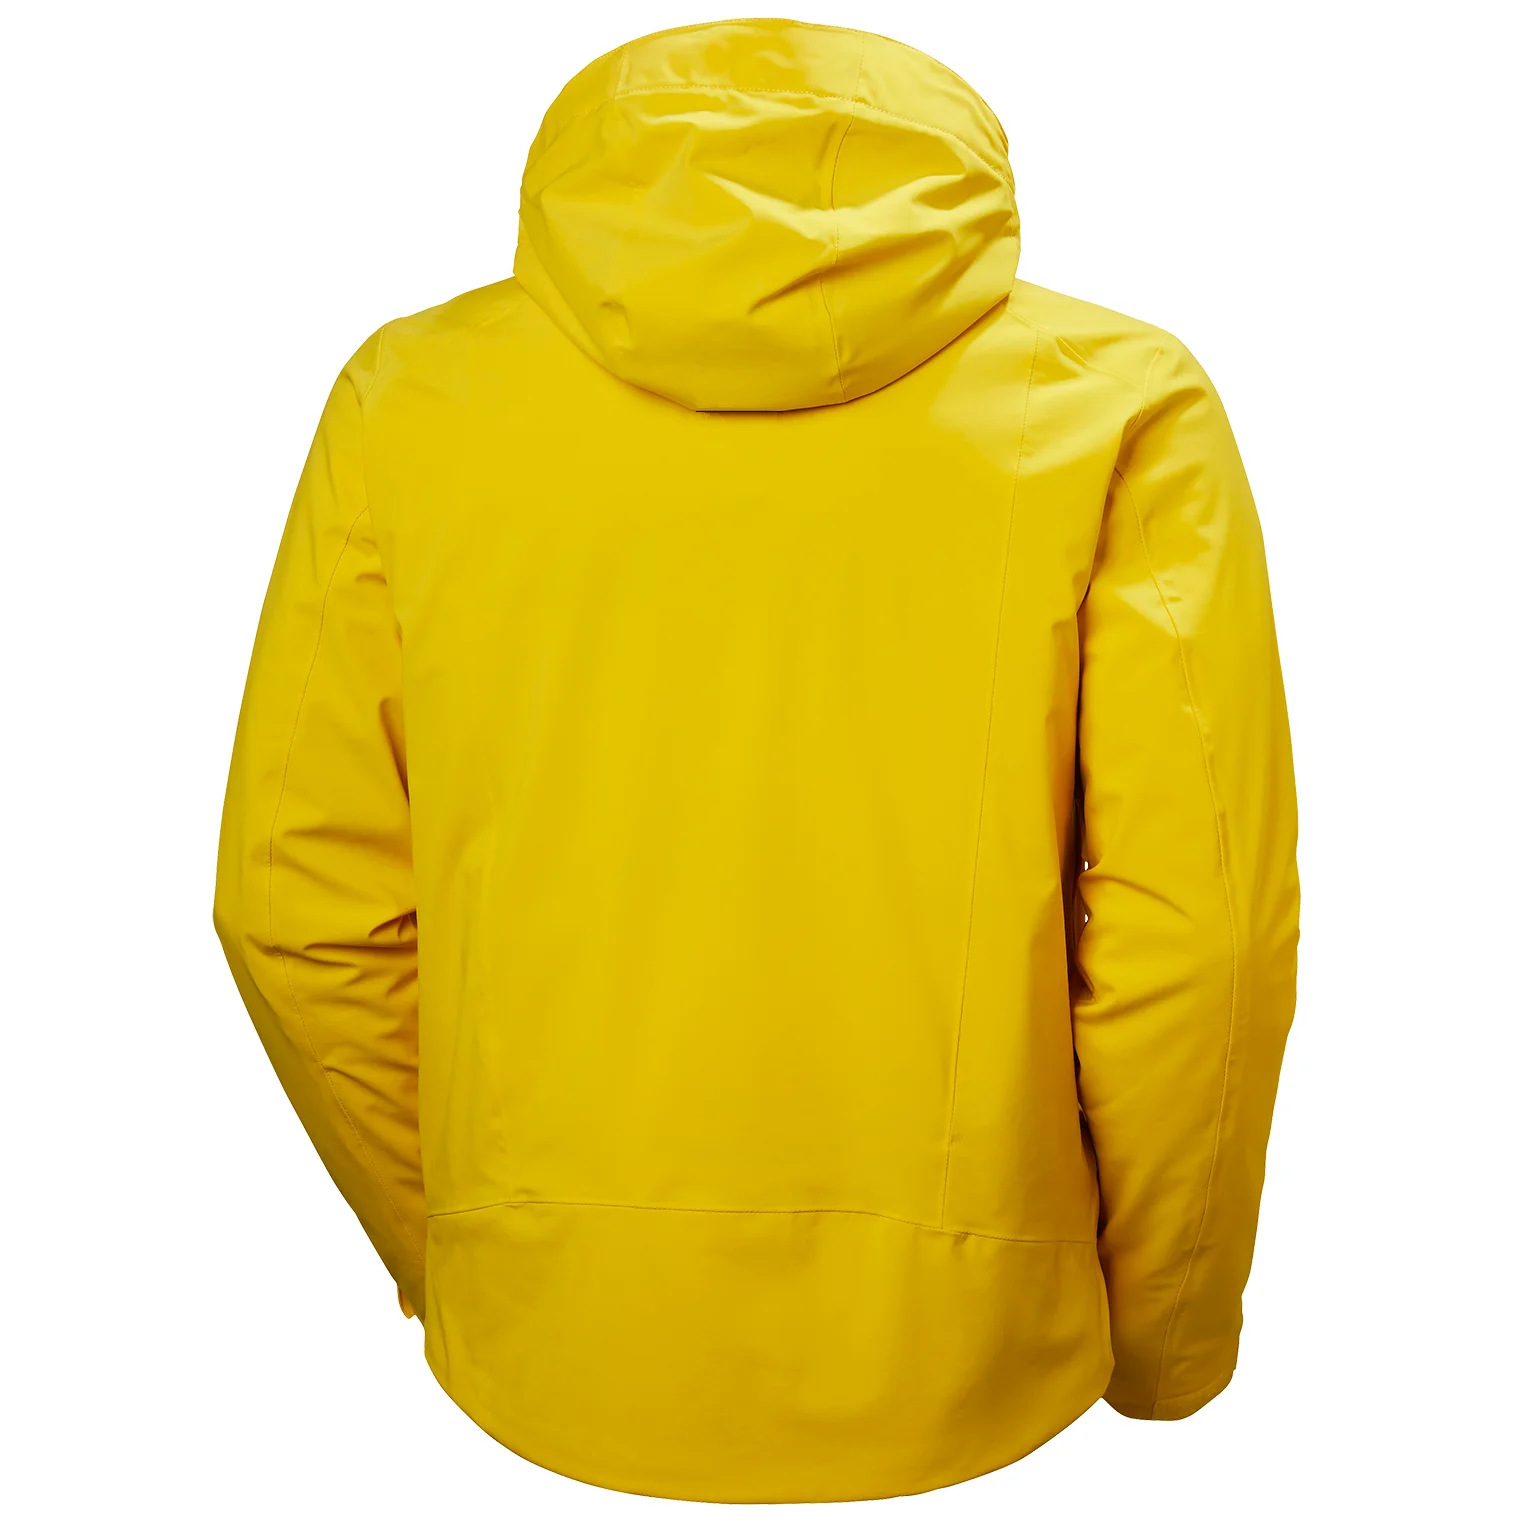 Mens Yellow Winter Waterproof Active Ski Jacket - Buy Ski Jacket ...